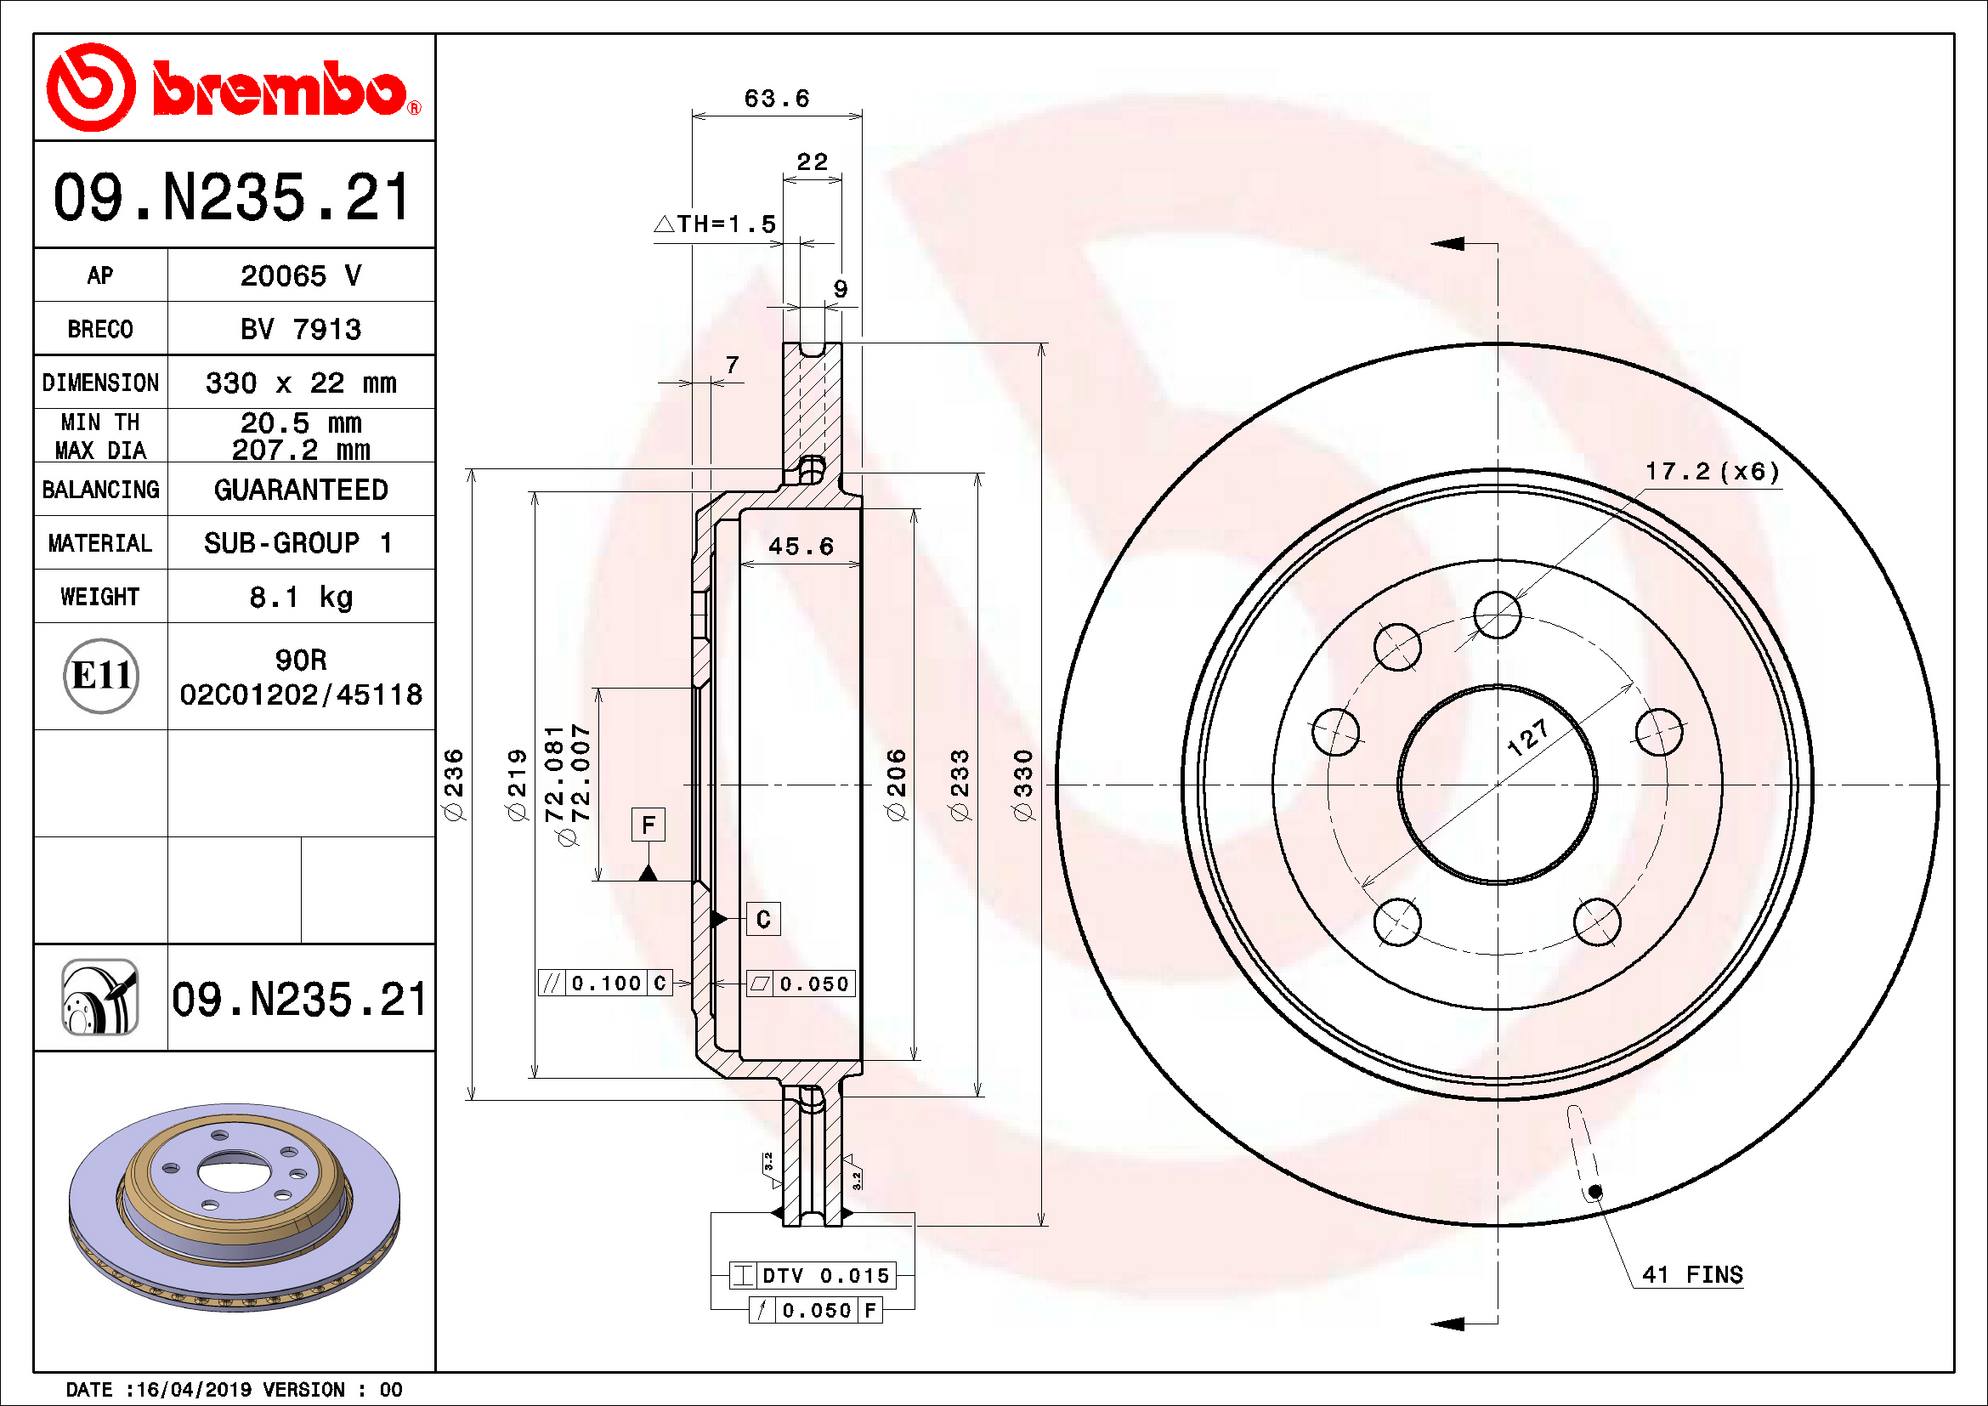 Brembo 09.N235.21 - 11-20 Dodge Durango Rear Premium UV Coated OE Equivalent Rotor